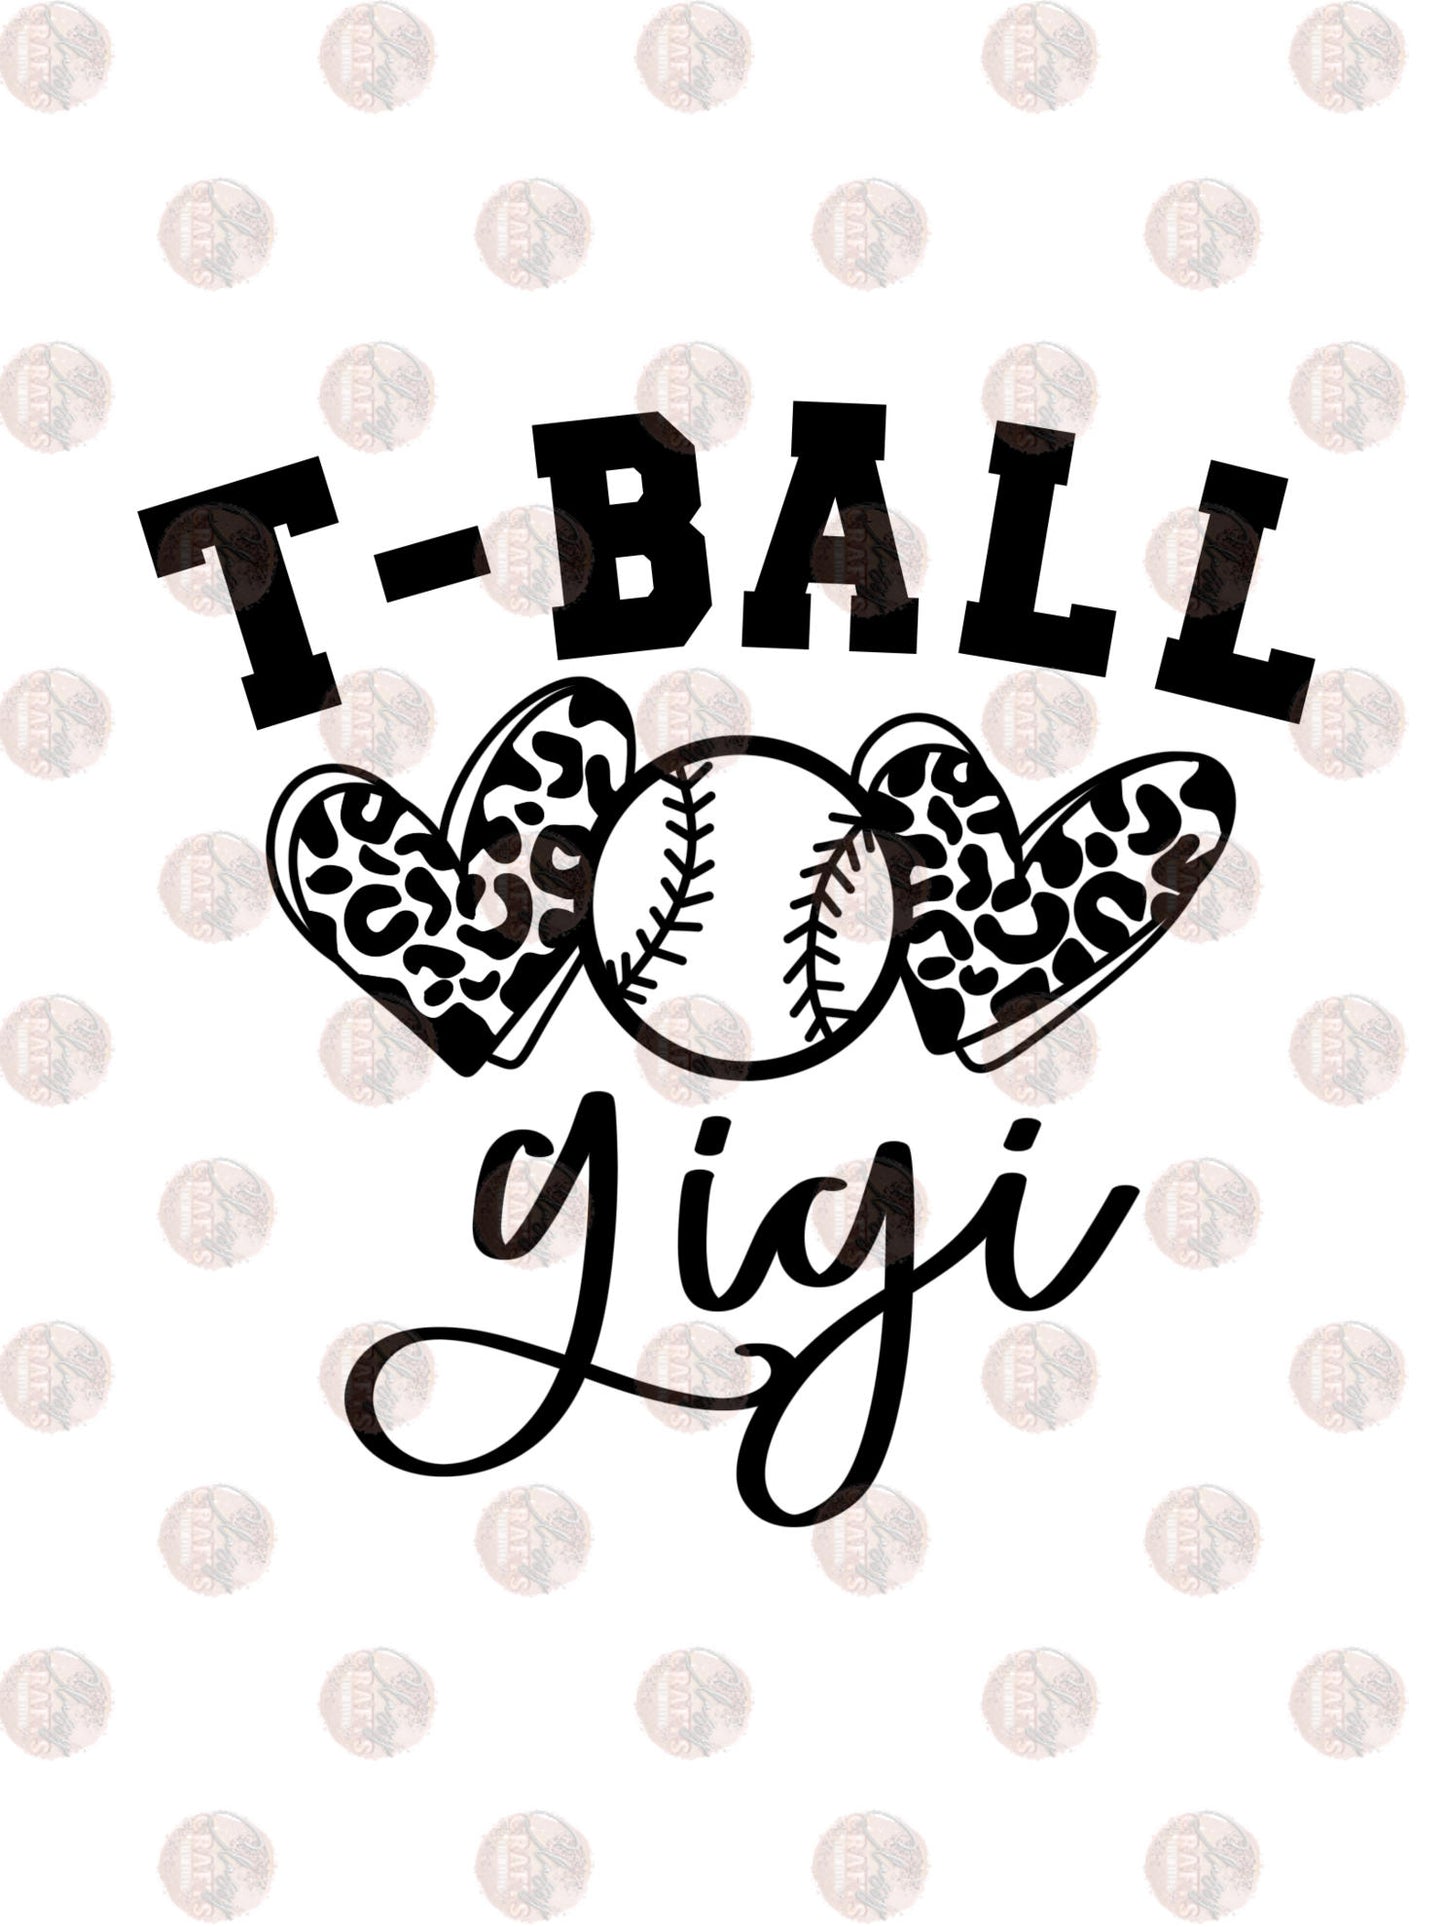 T-Ball Gigi Transfer